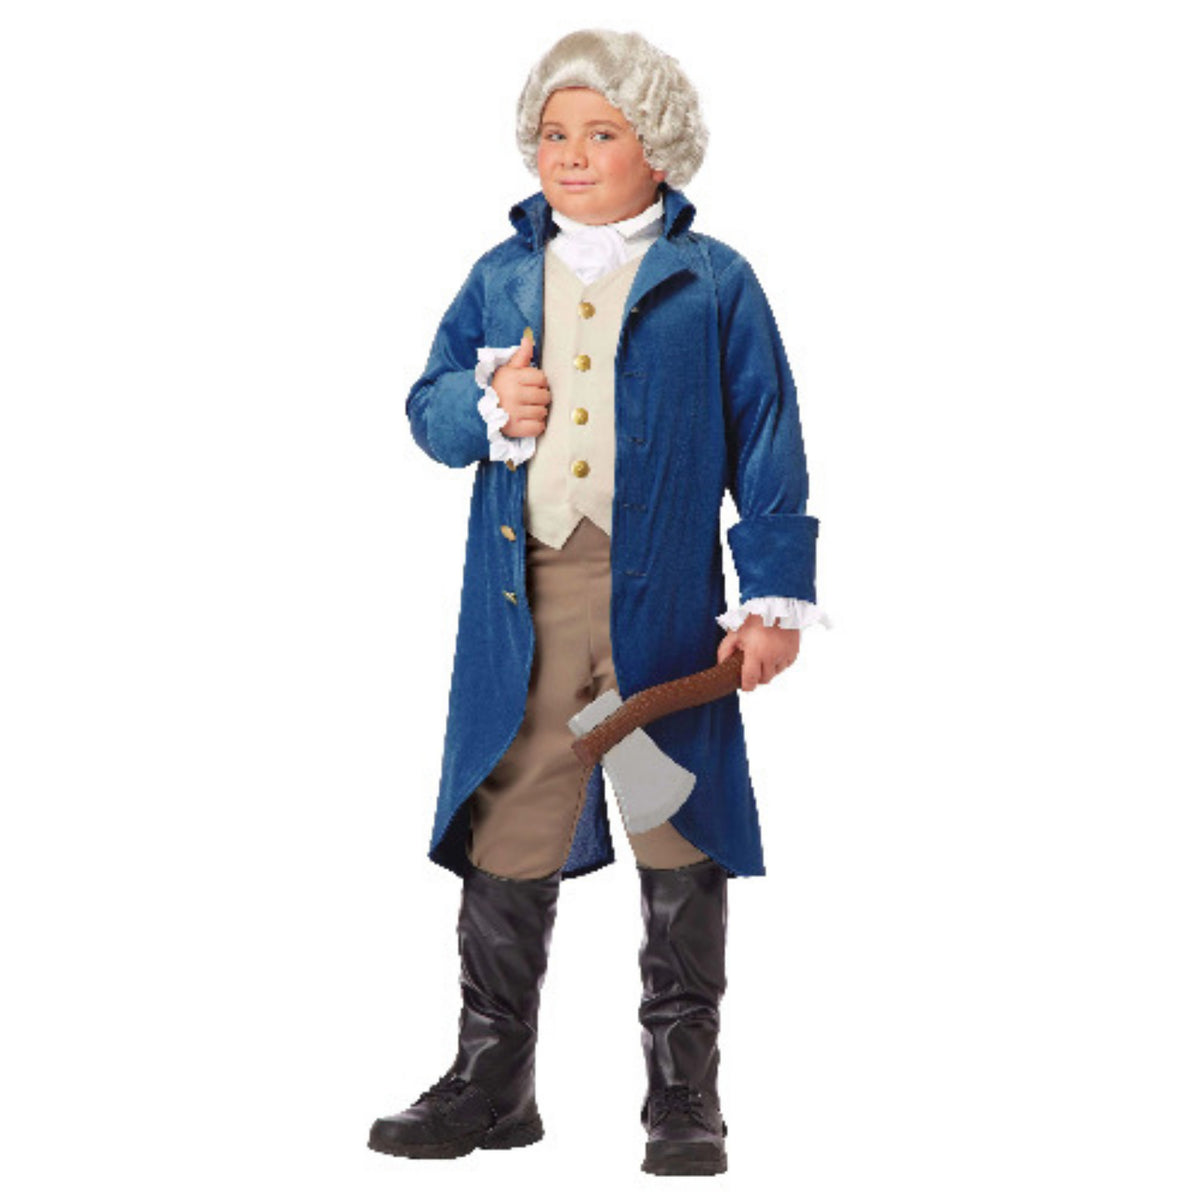 George Washington Childs Costume